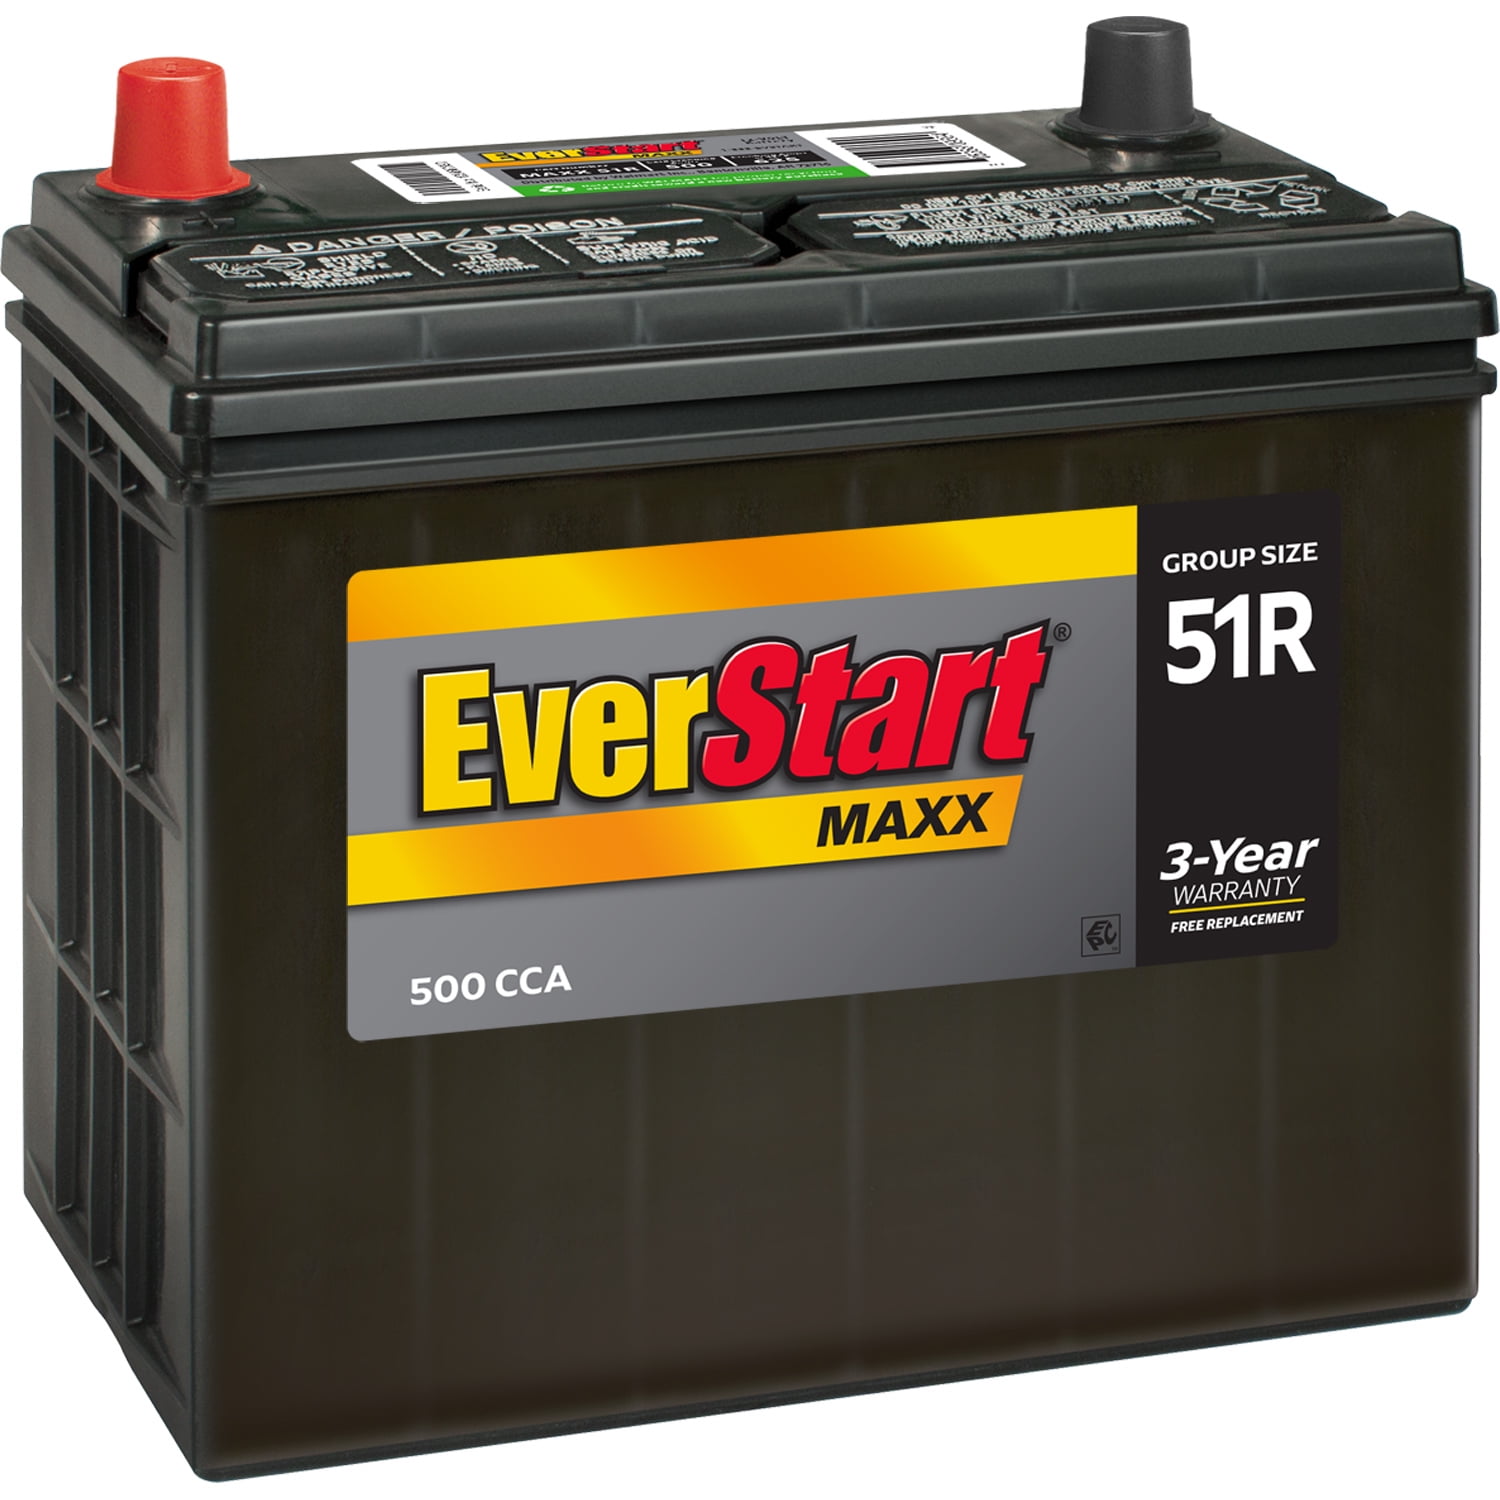 EverStart Maxx Lead Acid Automotive Battery, Group Size 51R (12  Volt / 500 CCA)